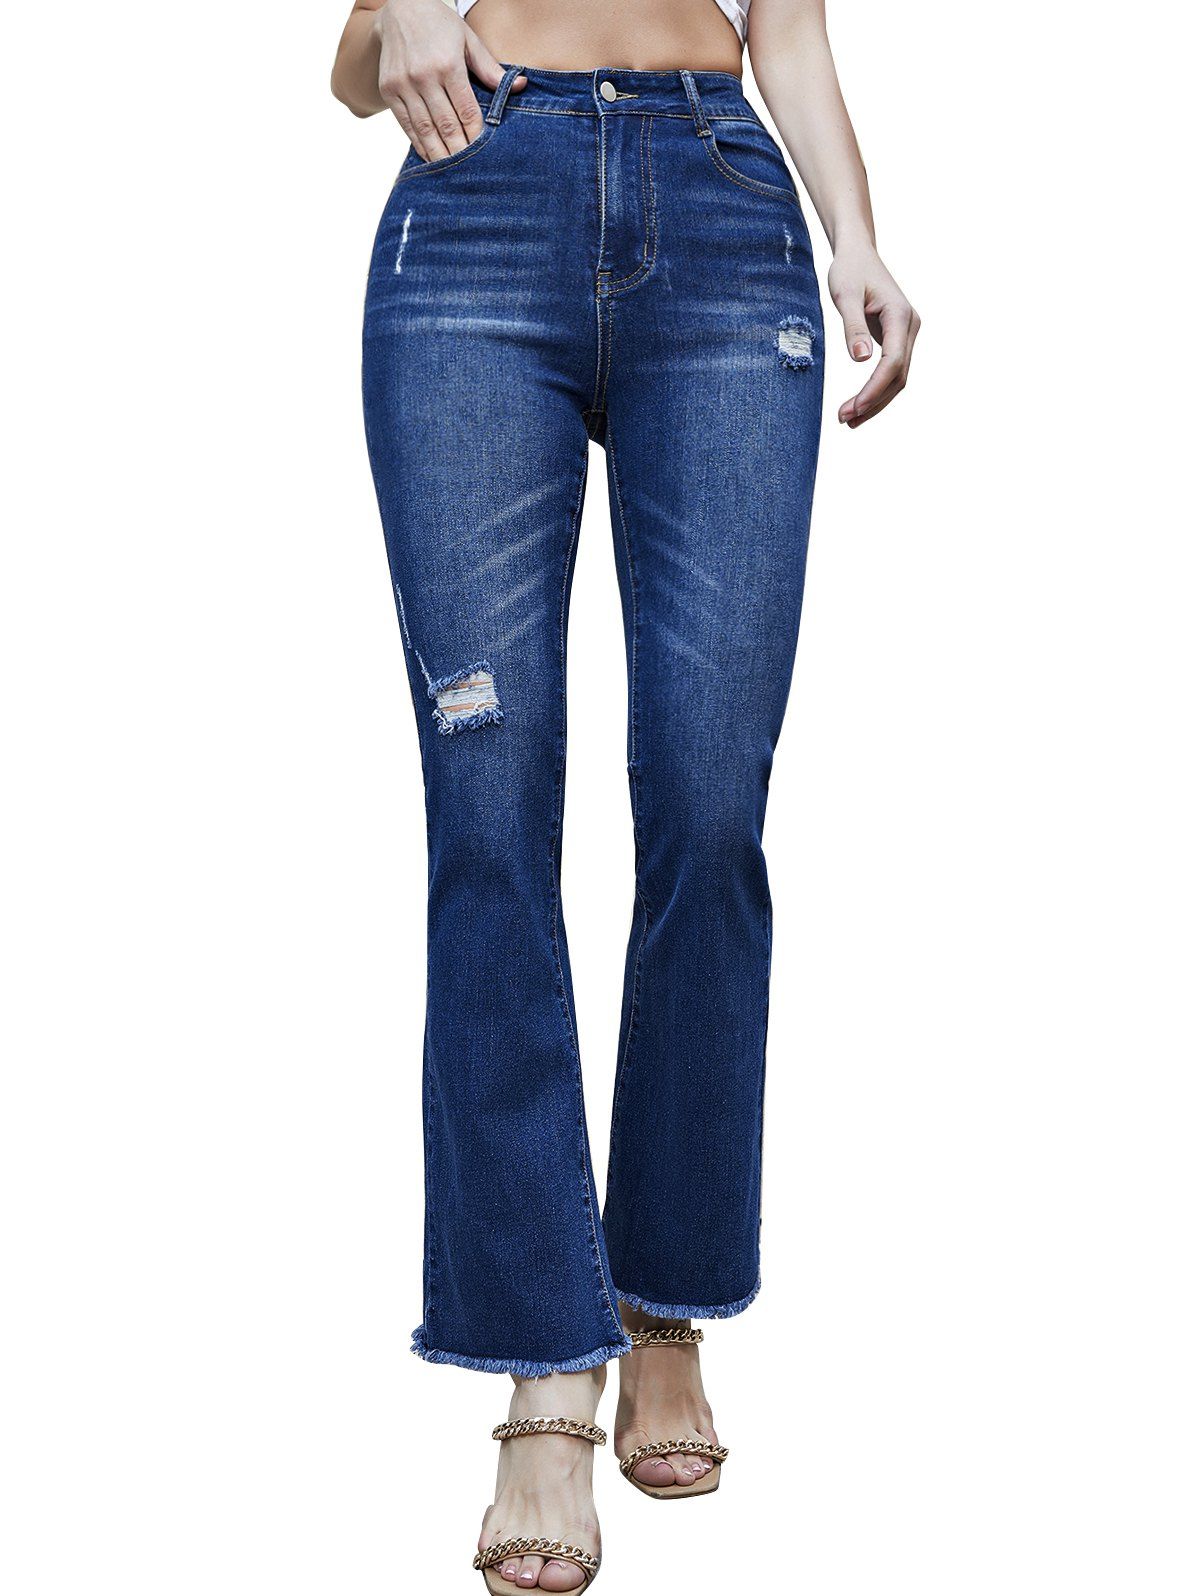 Ripped Frayed Hem Flare Jeans Zip Fly Destroy Wash Long Flare Denim Pants - BLUE XL